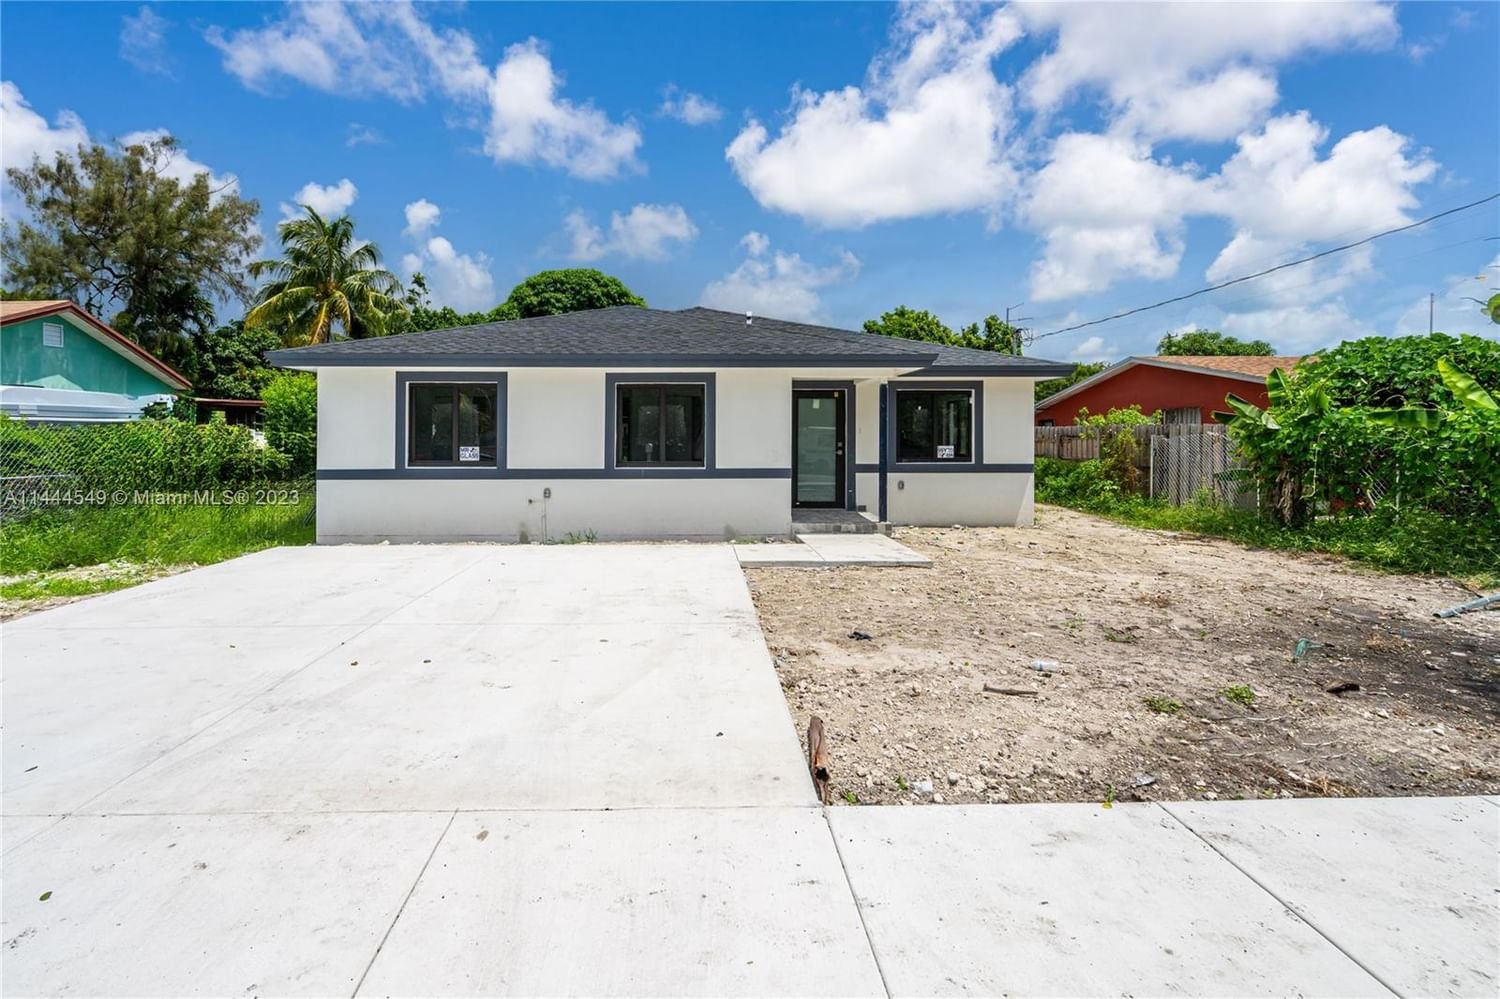 Real estate property located at 731 117, Miami-Dade County, Miami, FL